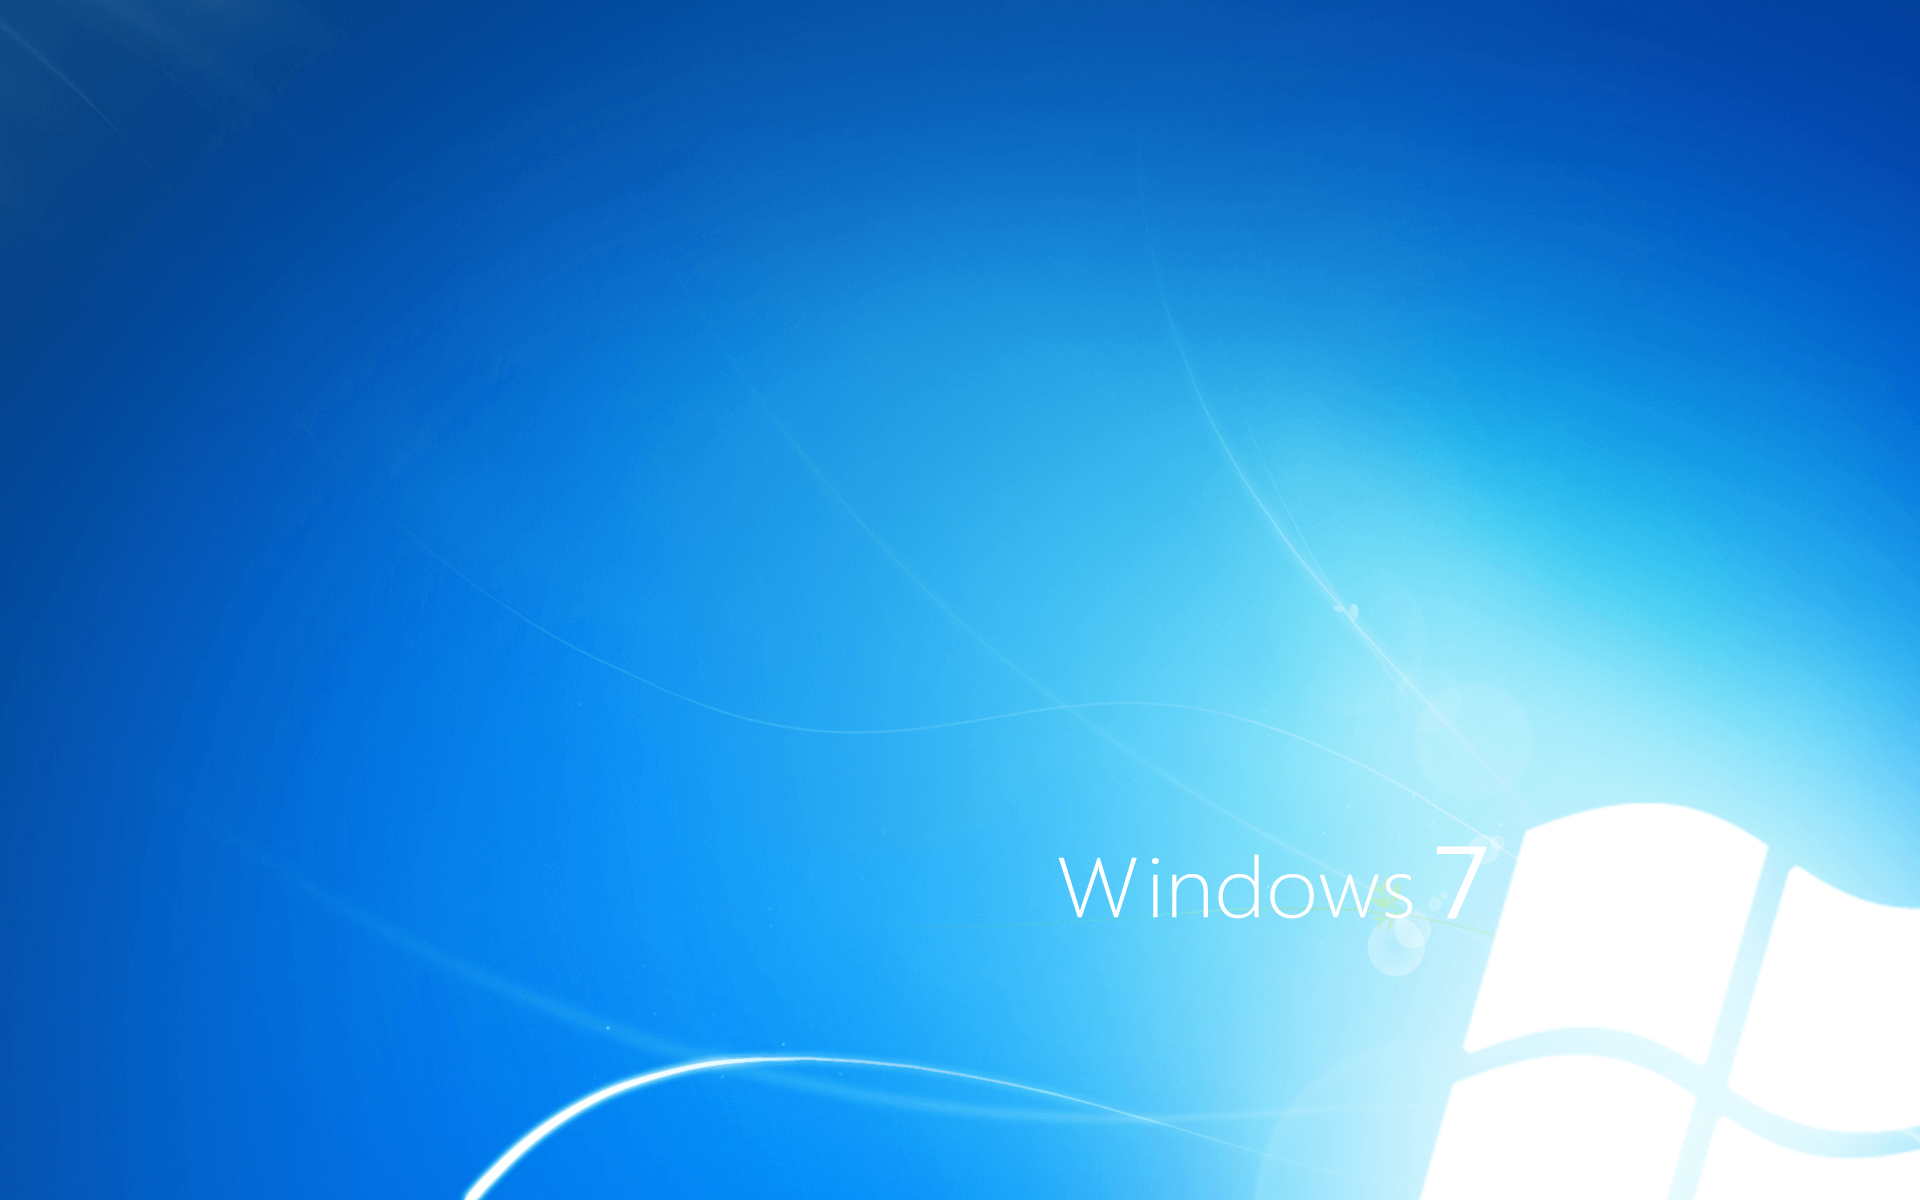 Retro Windows Wallpapers - Top Free Retro Windows Backgrounds